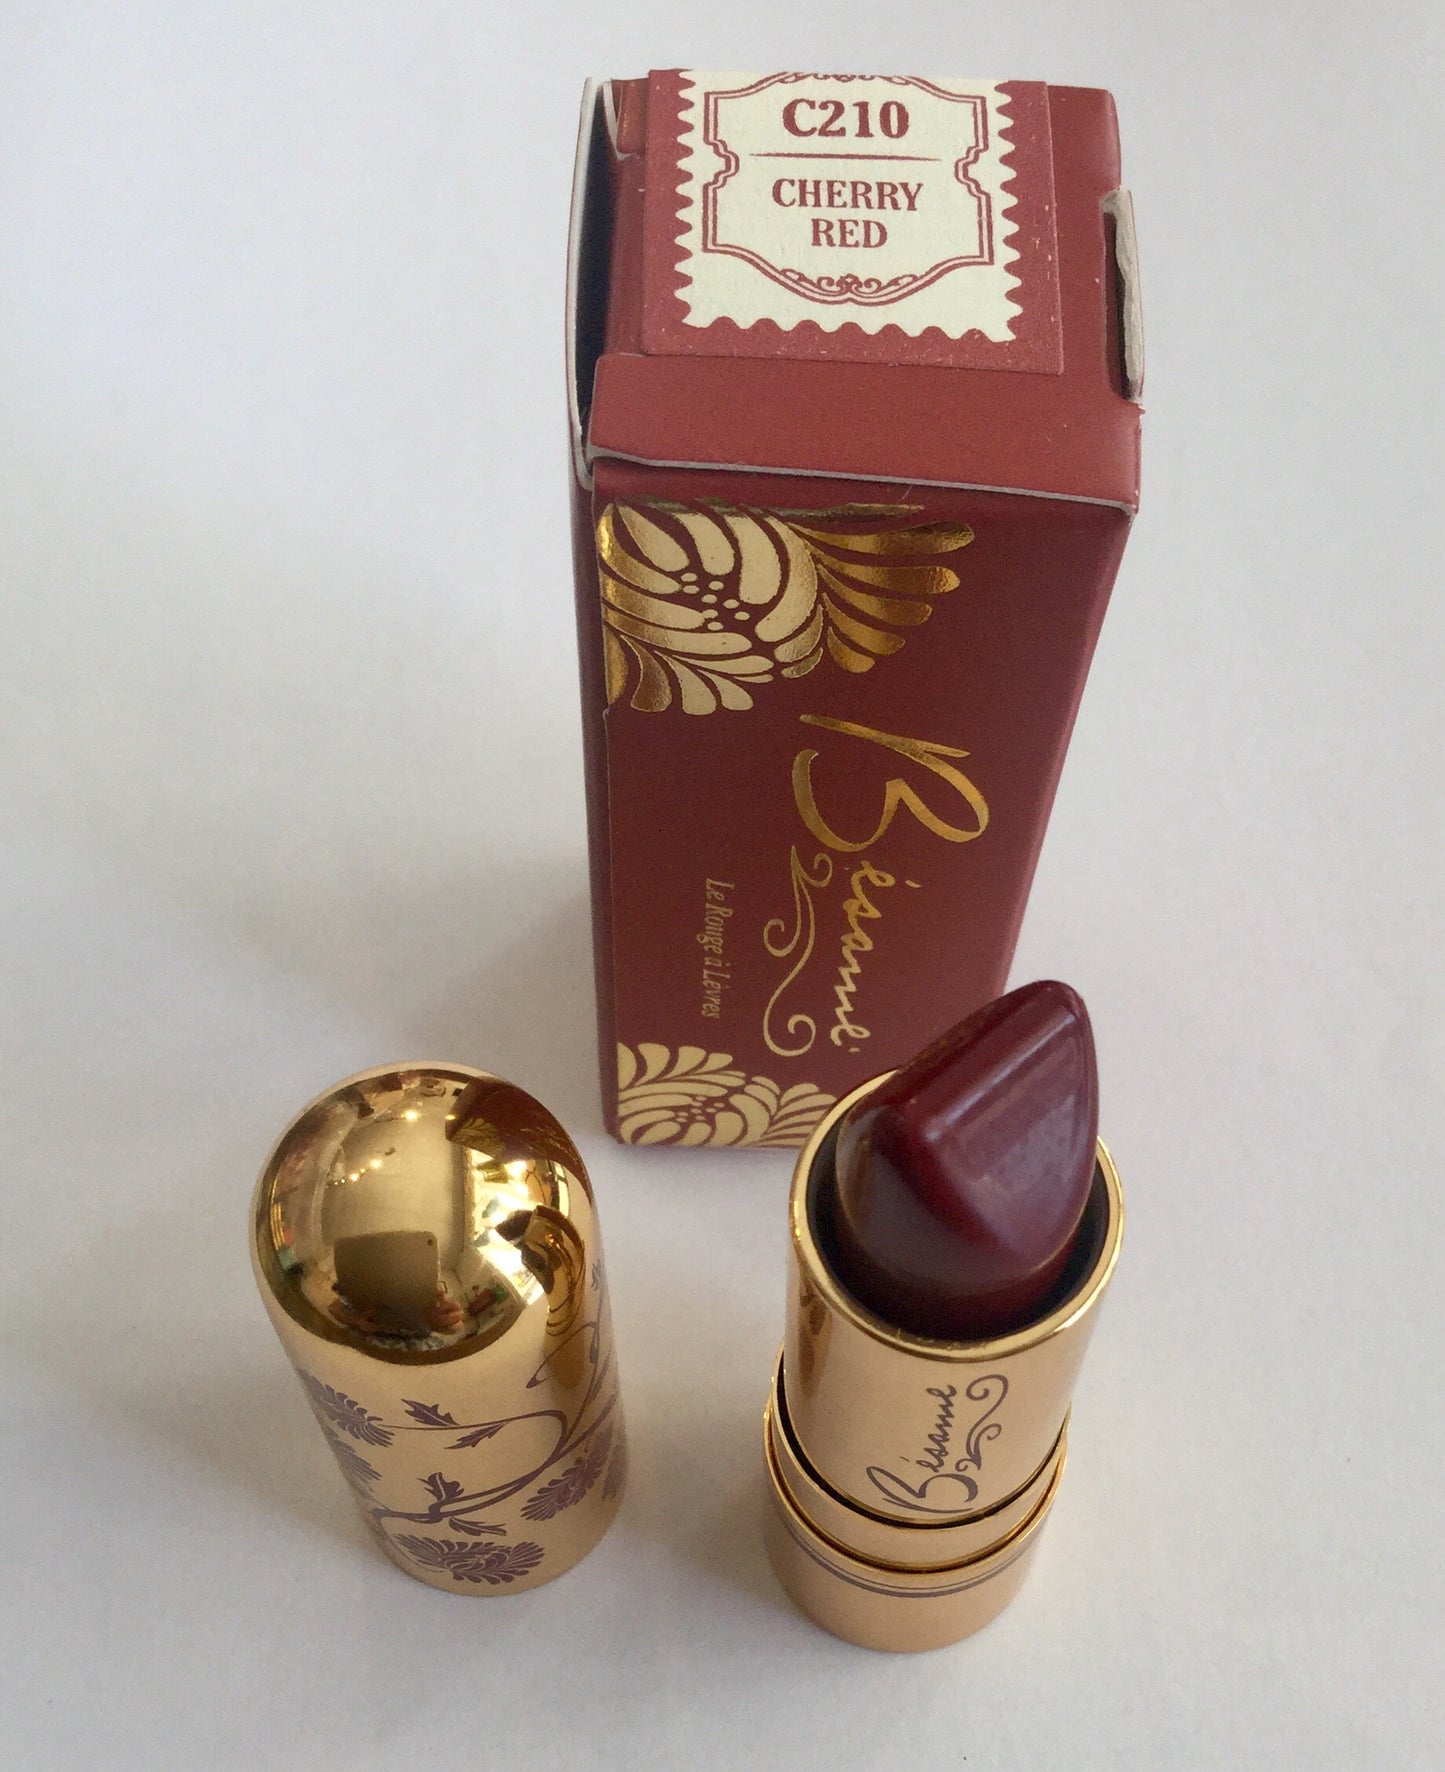 1935 Cherry Red Lipstick